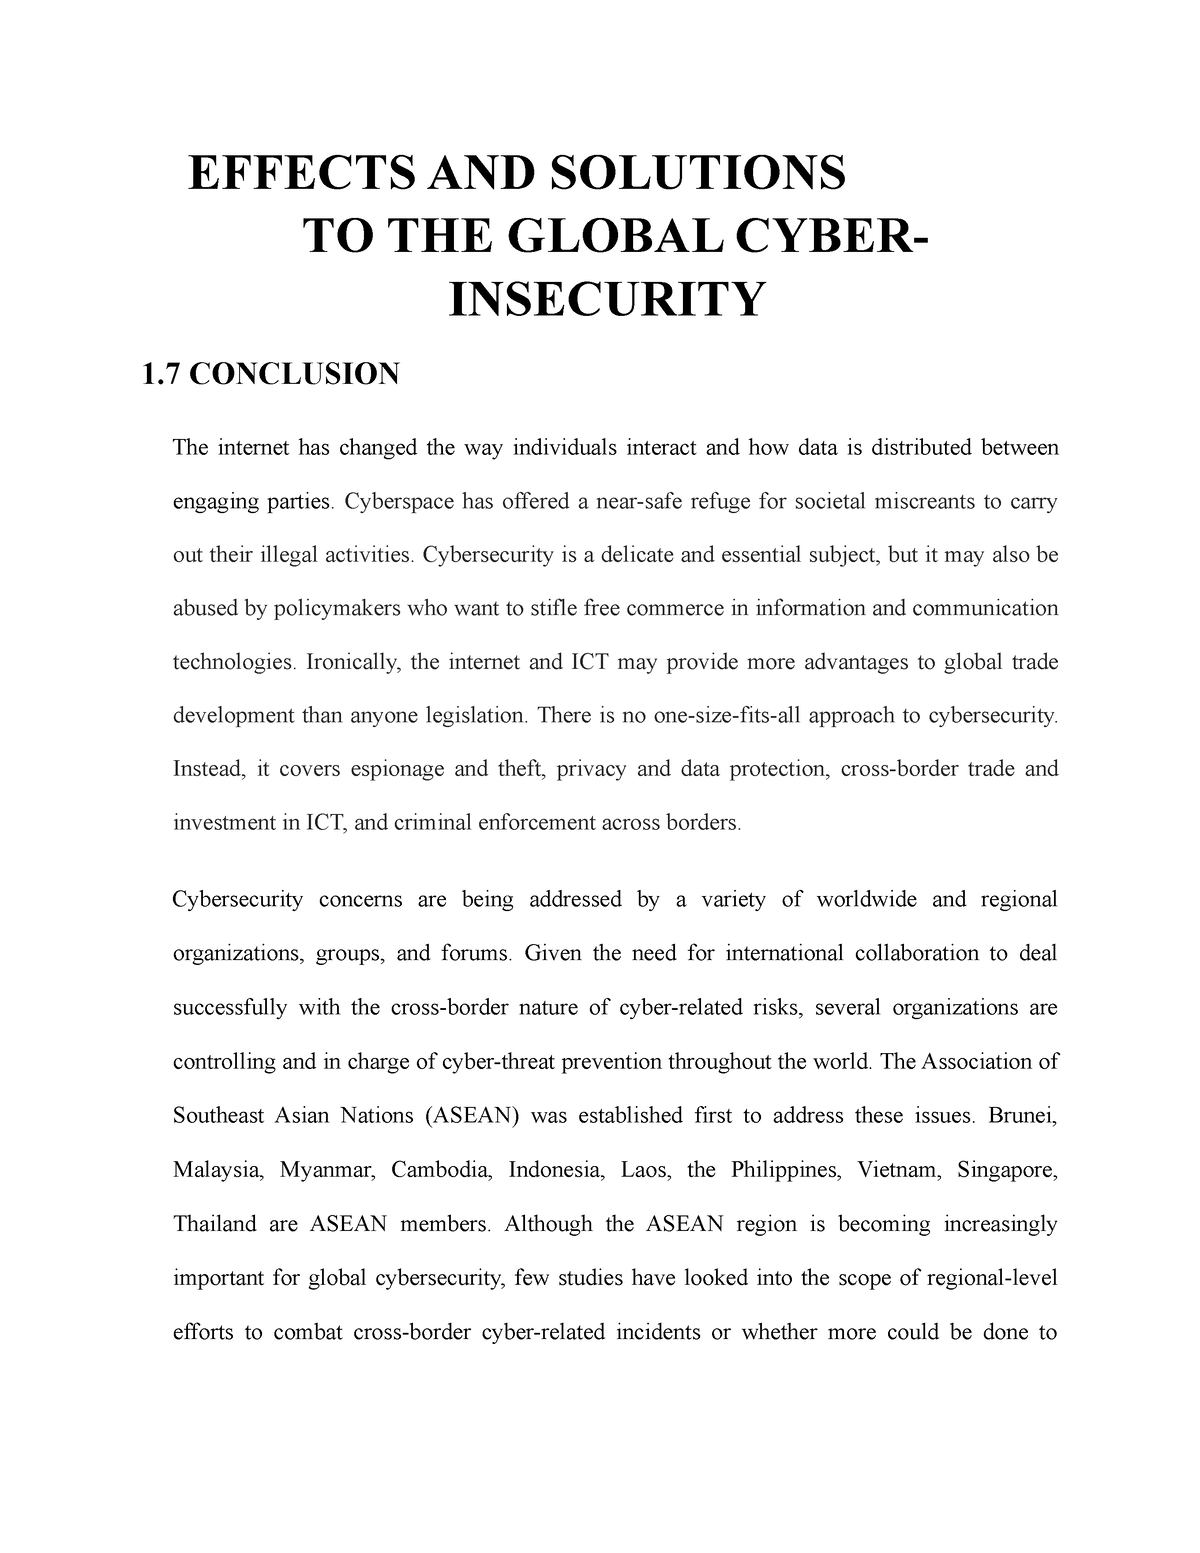 cyber crime essay conclusion